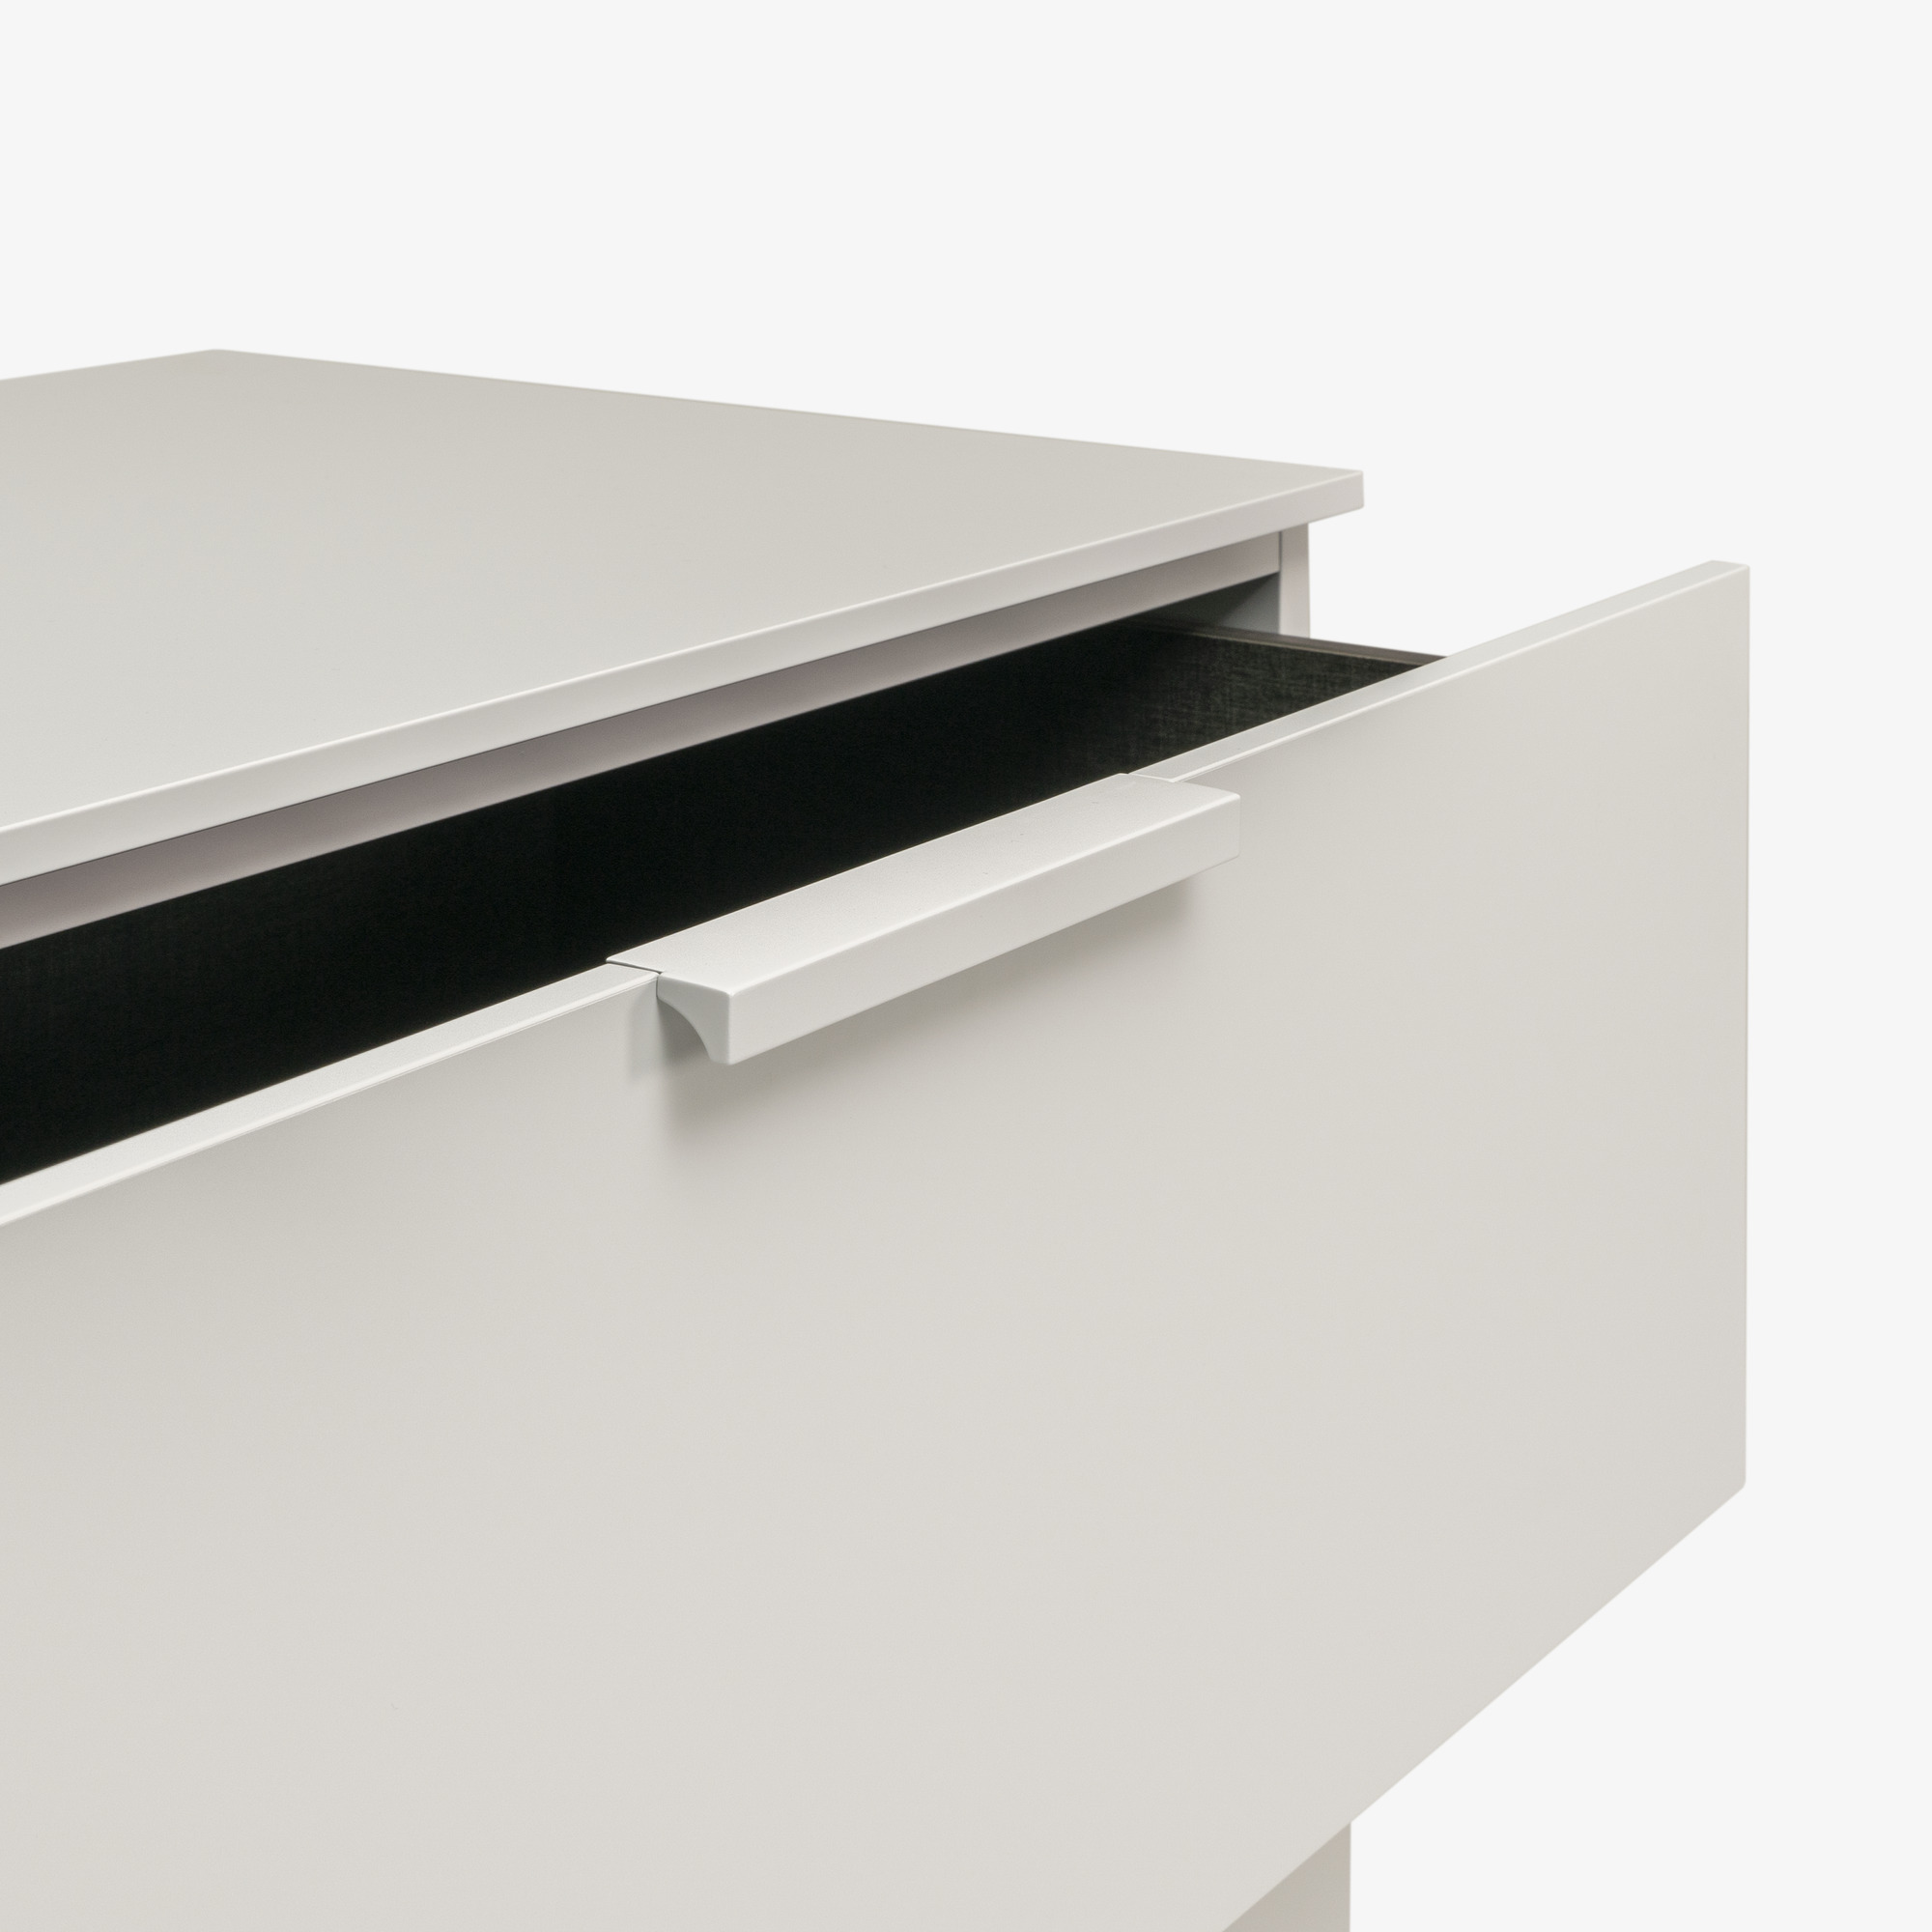 Image Sideboard unit 3 drawers c 3 5